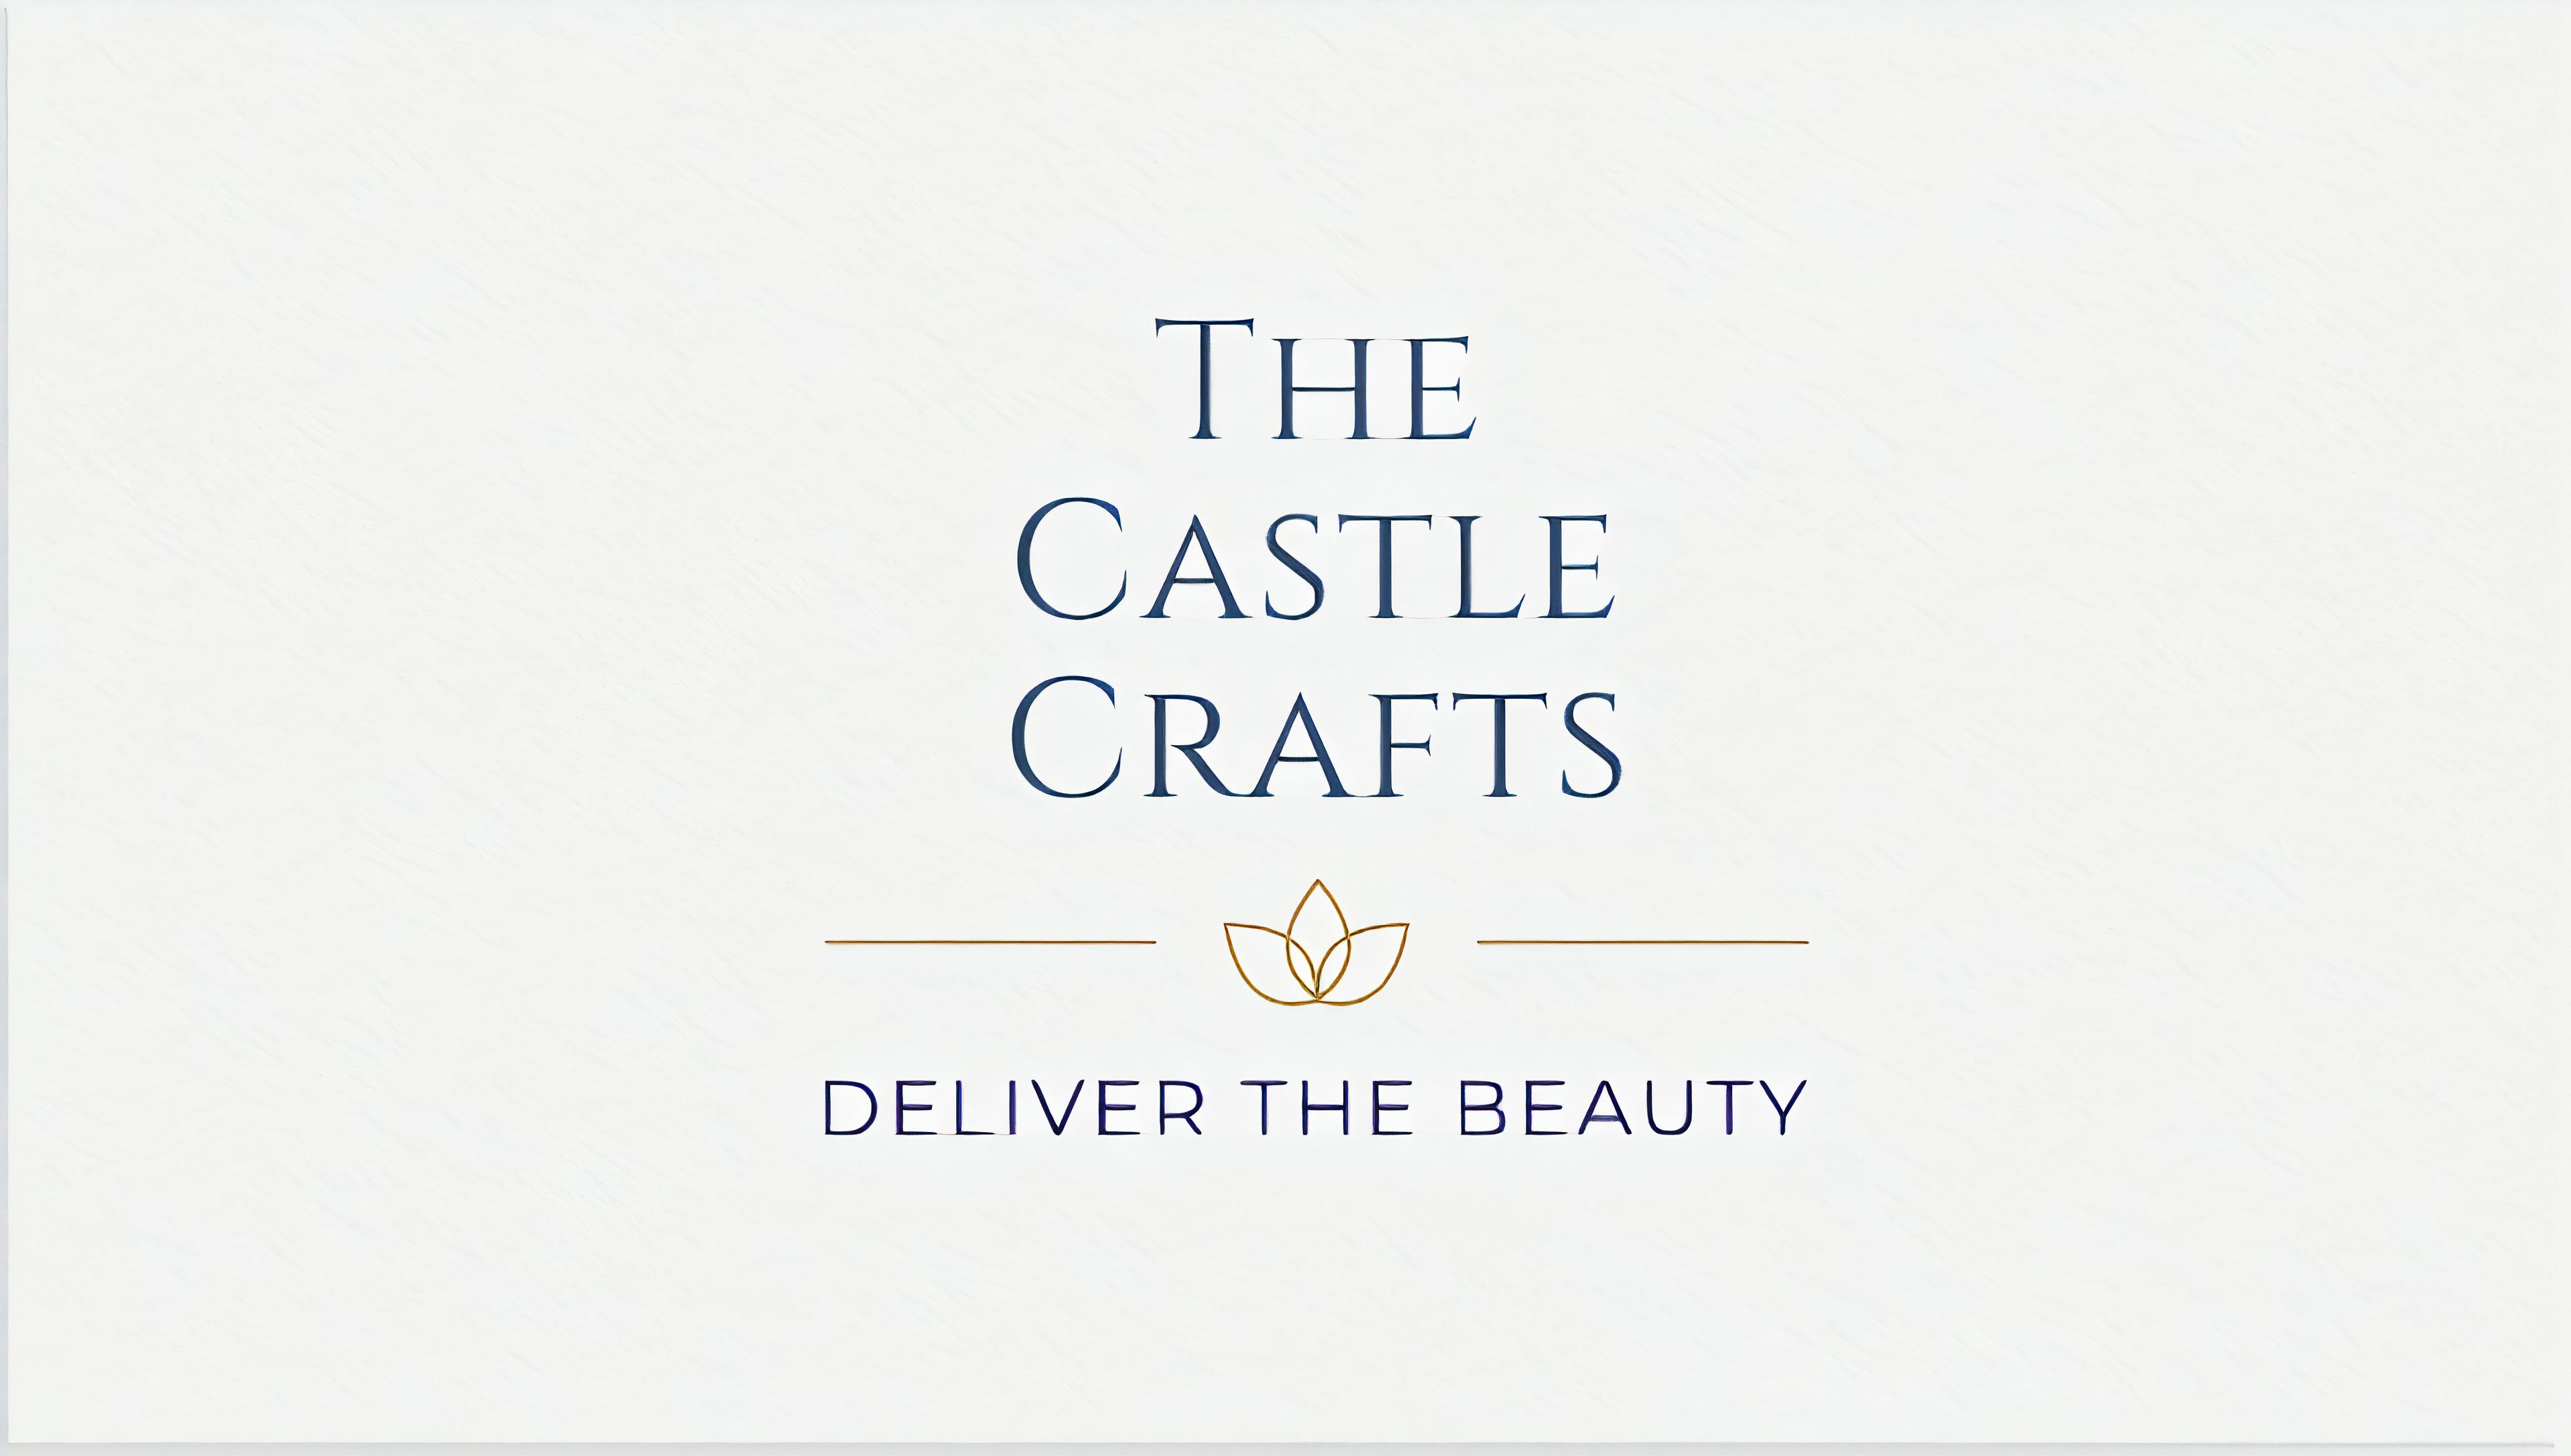 M/S The Castle Crafts